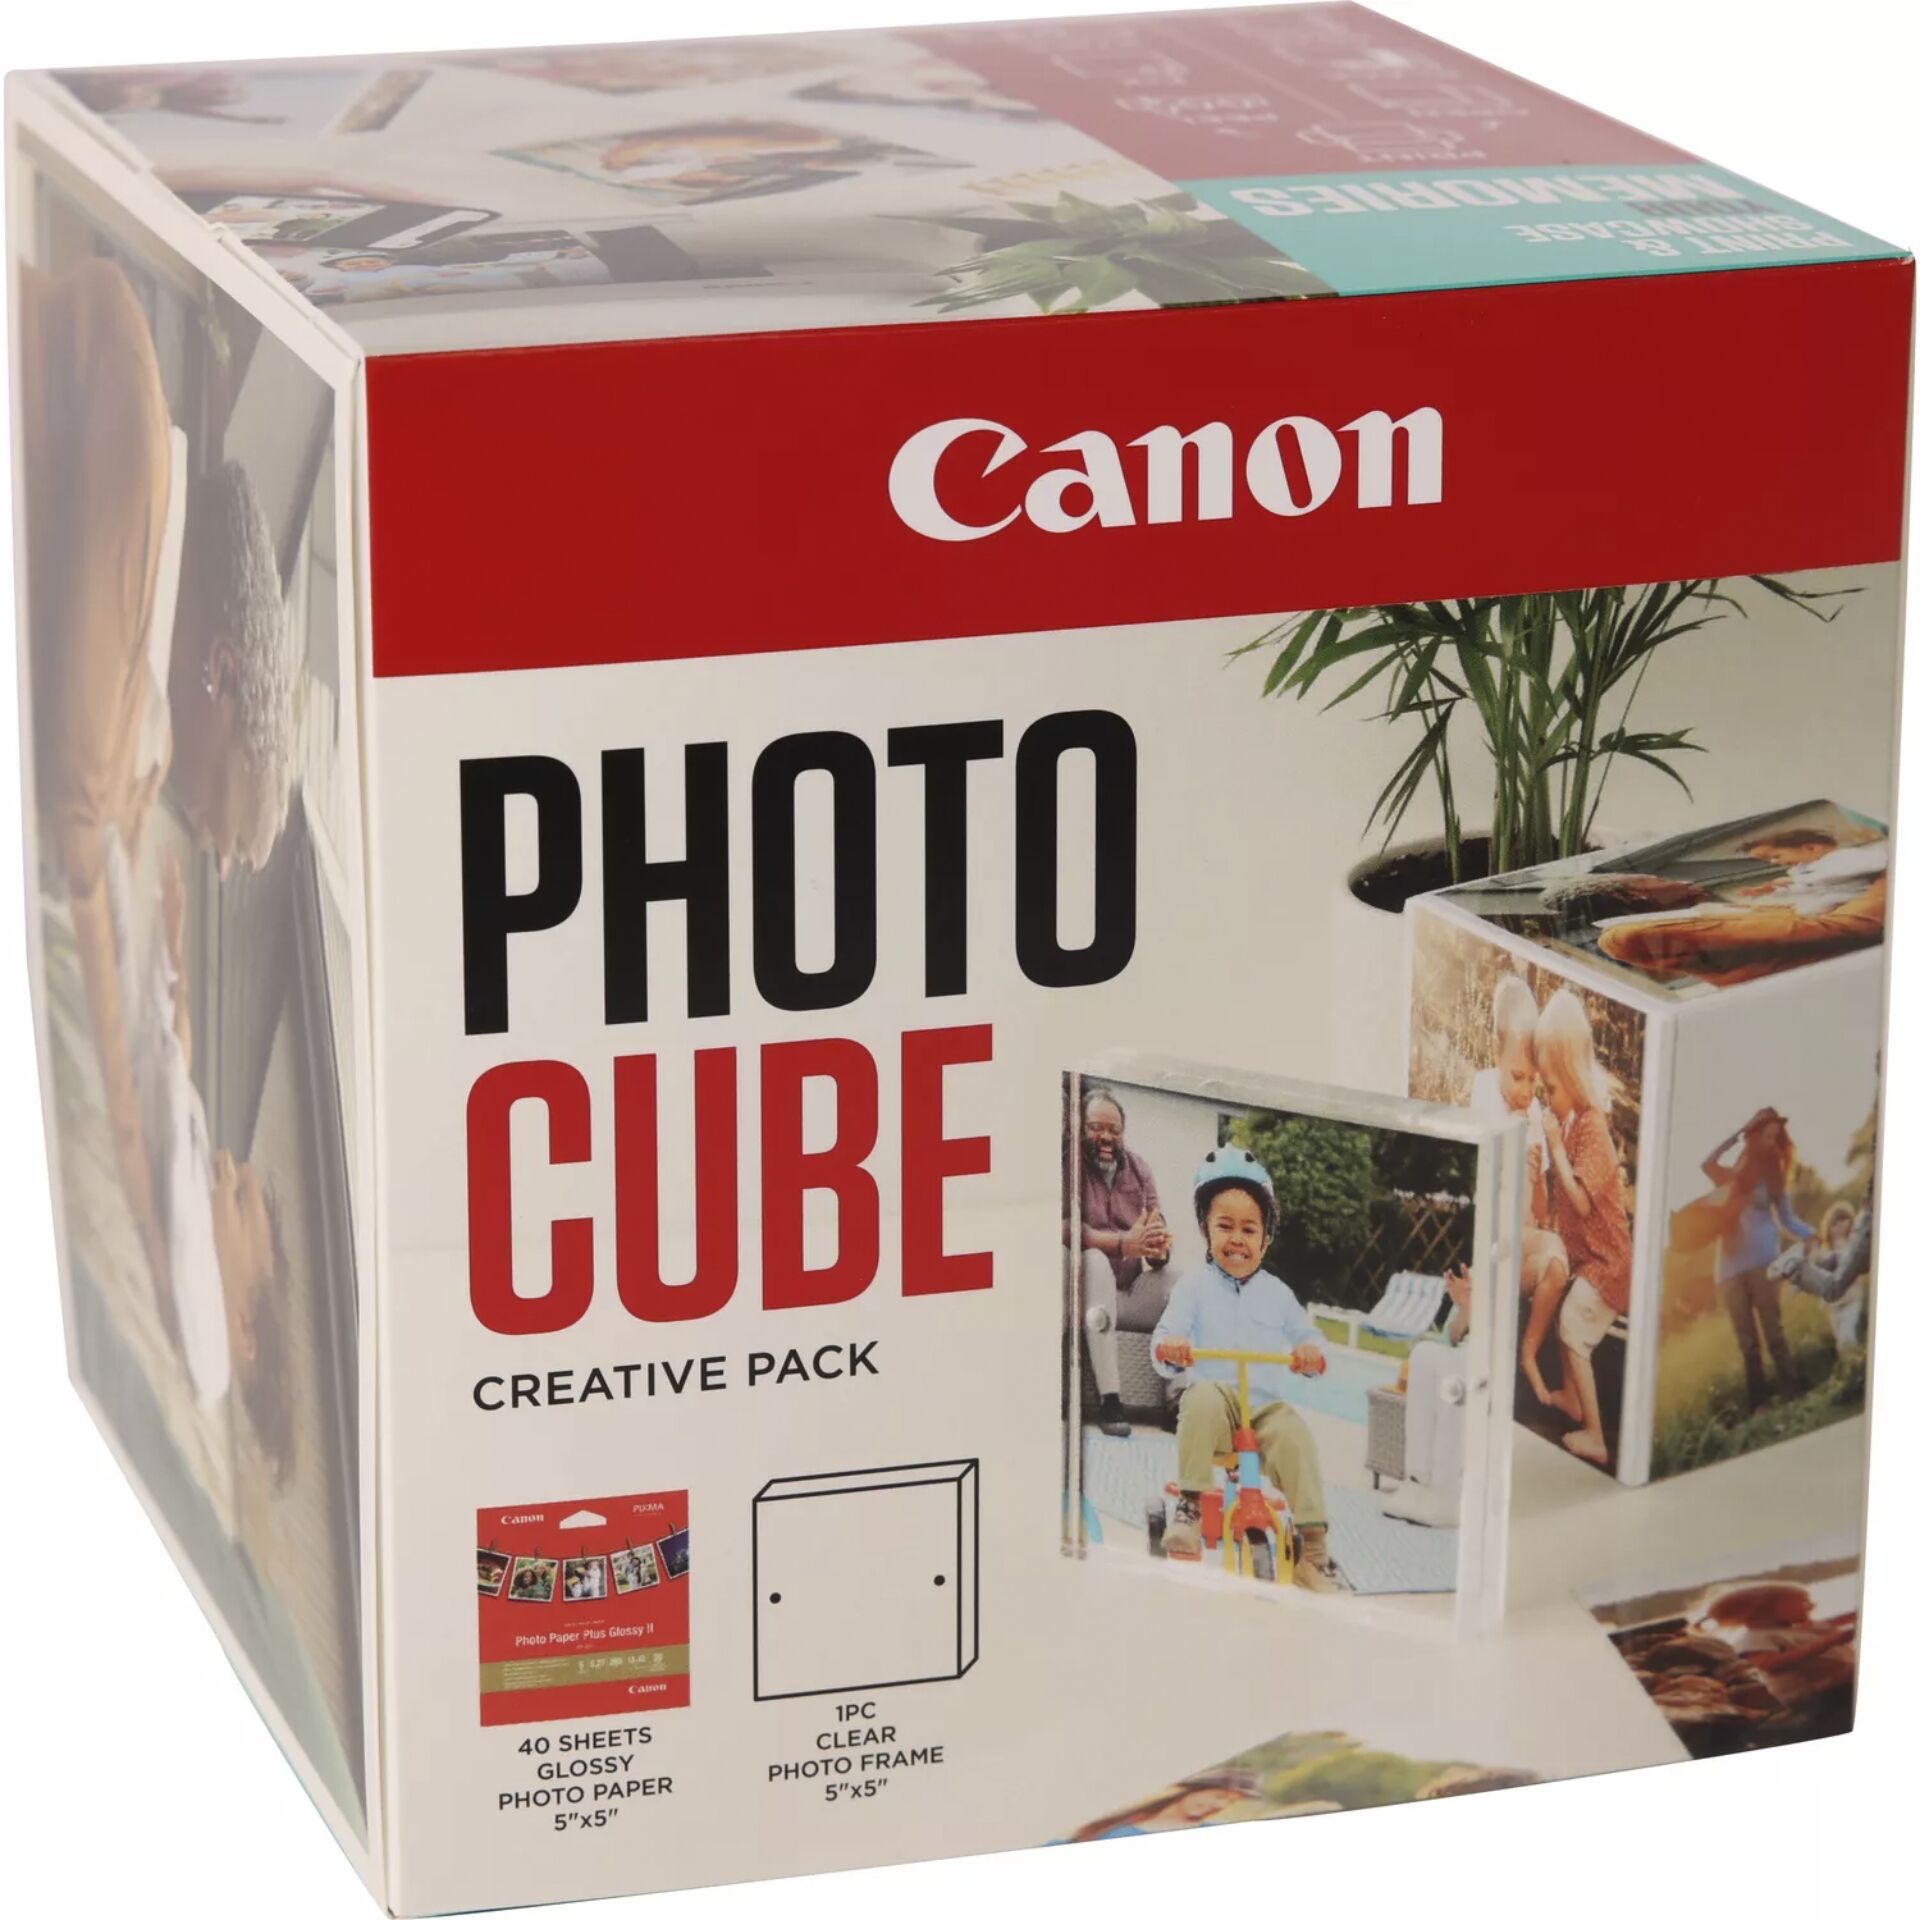 Canon PP-201 13x13 cm Photo Cube pacch.creativo bianco blu 4